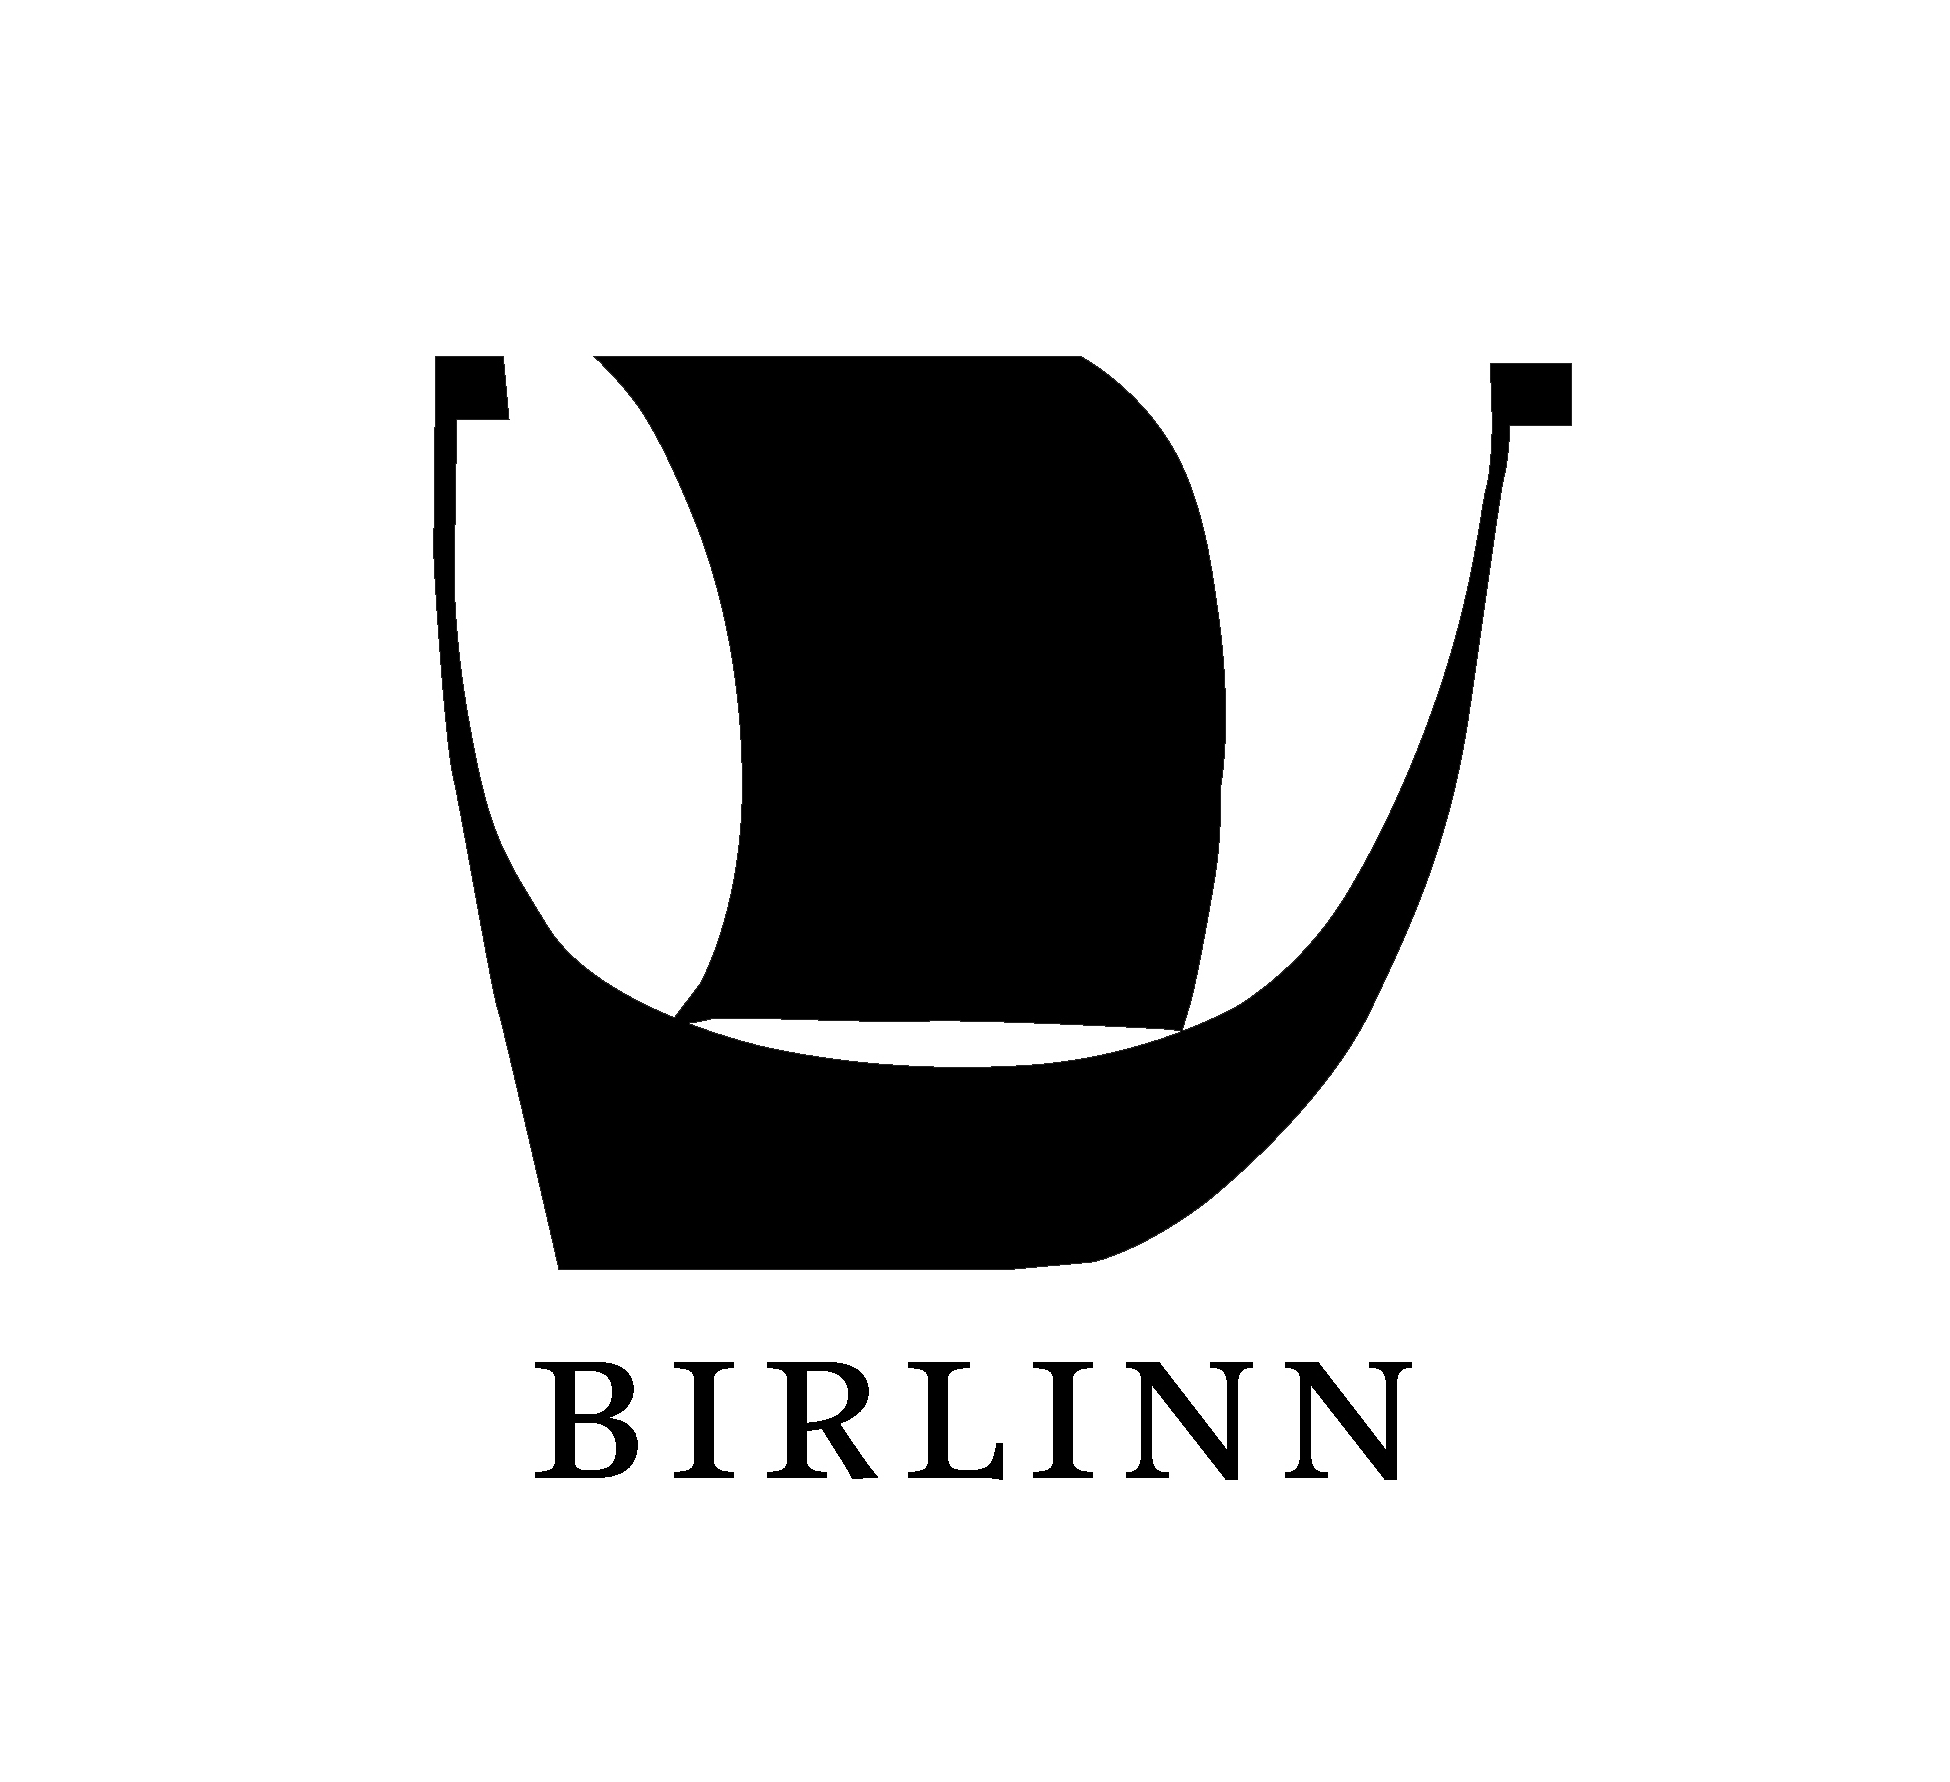 Image showing Birlinn